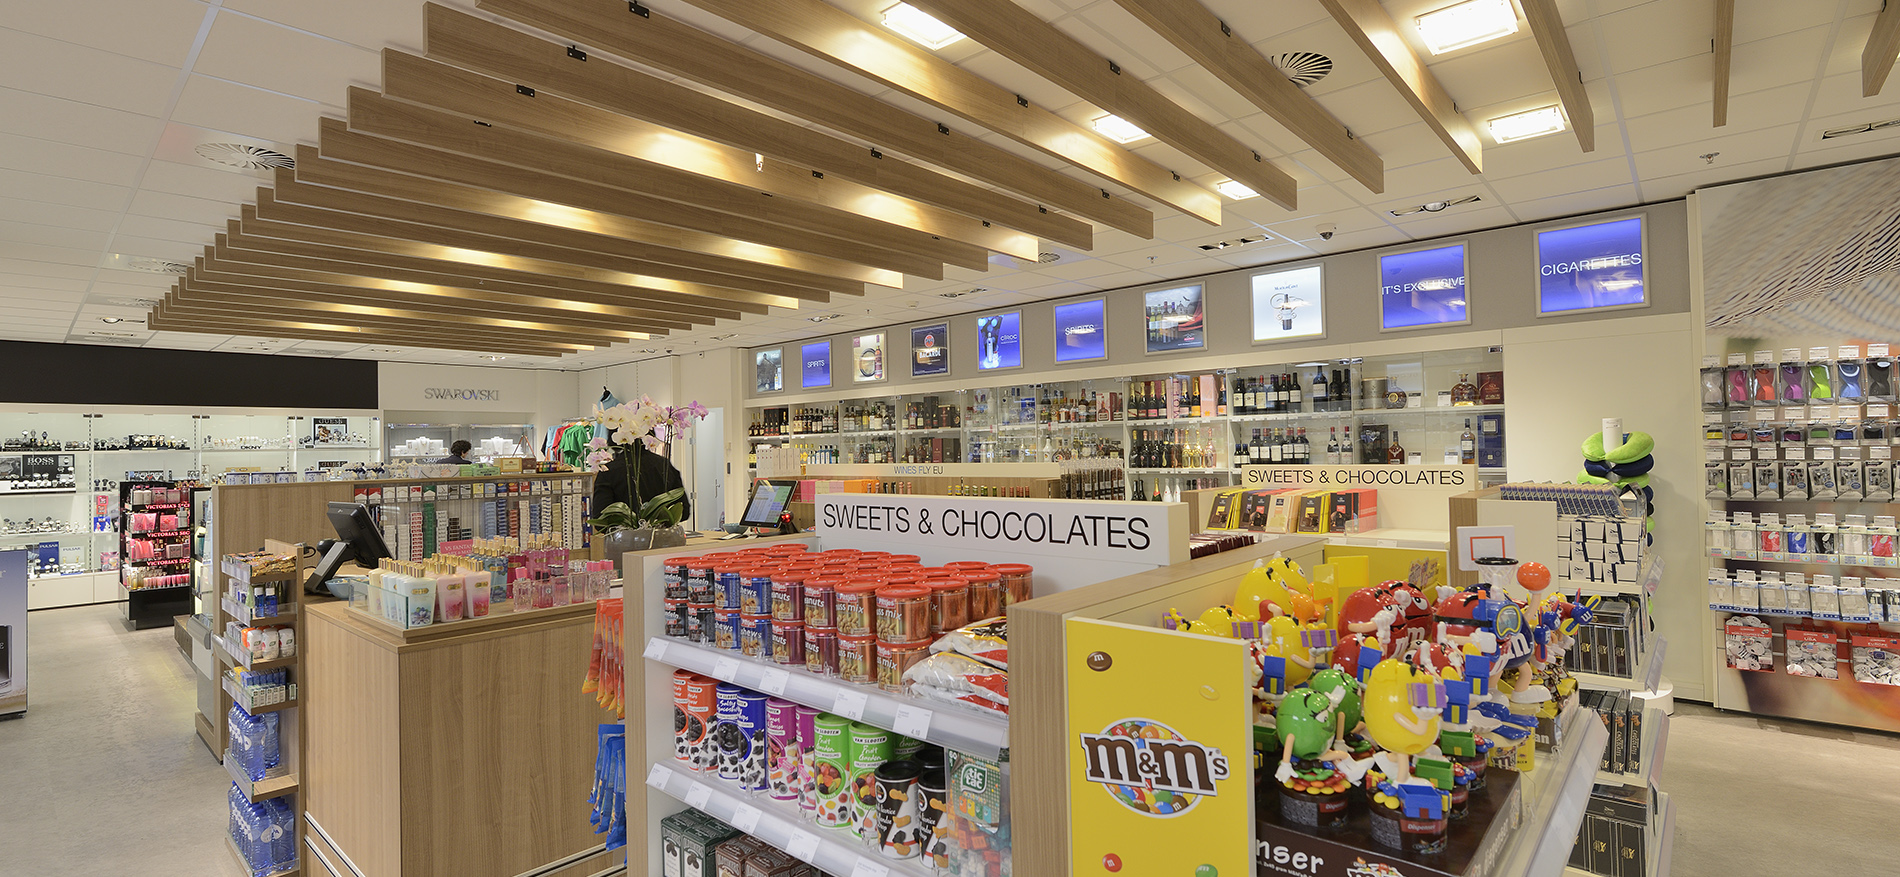 B&S Crew Shop – Winkelinrichting Luchthaven Schiphol - Retailketens